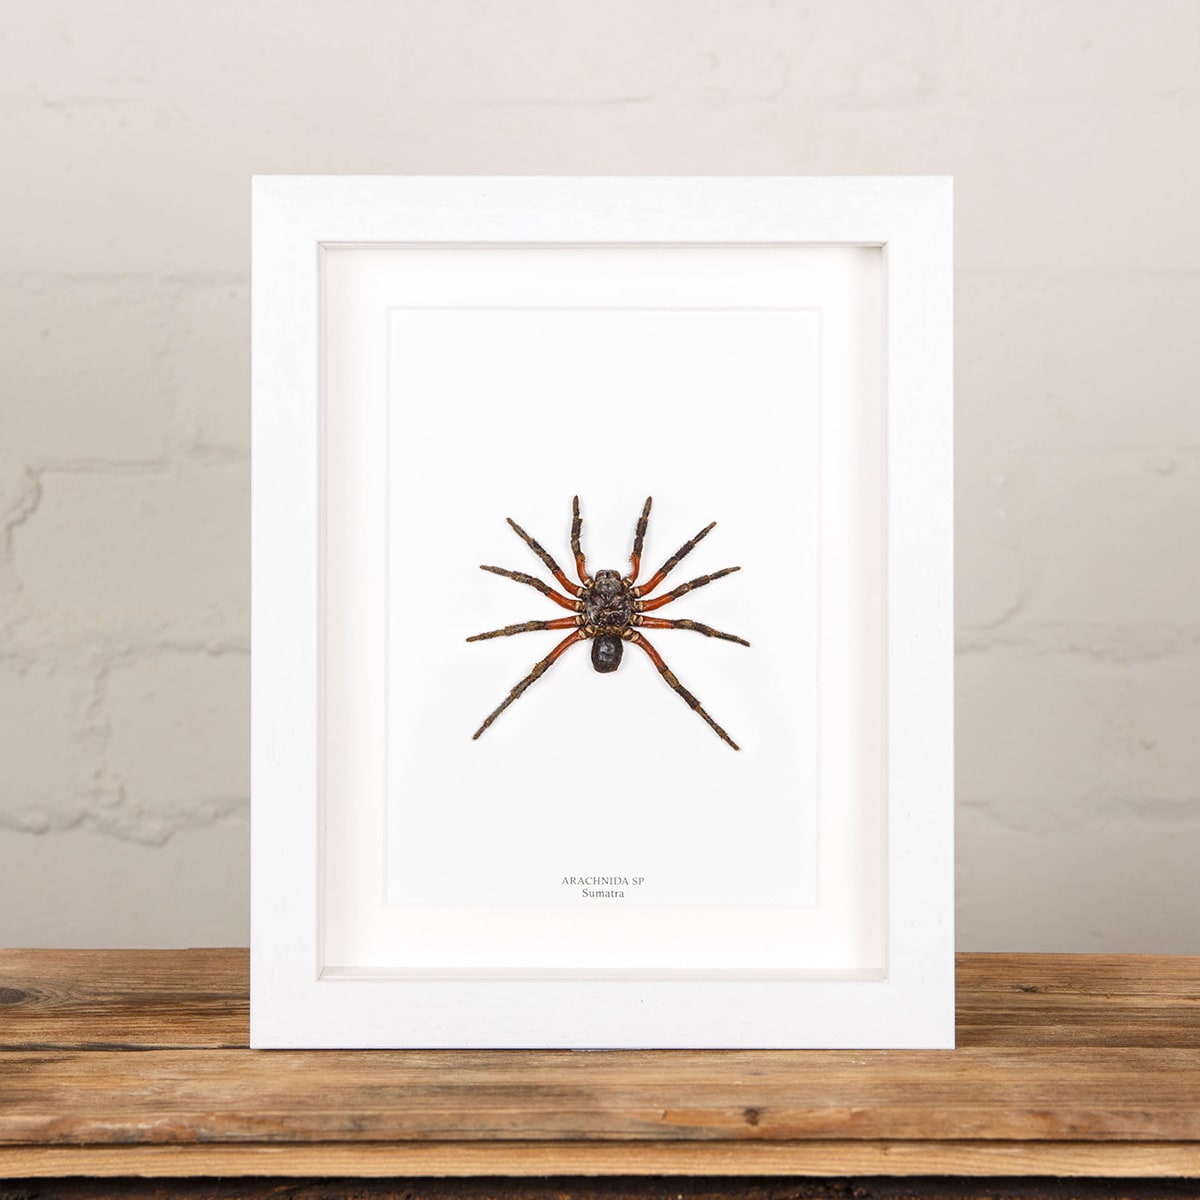 Spider from Sumatra In Box Frame (Arachnida sp)